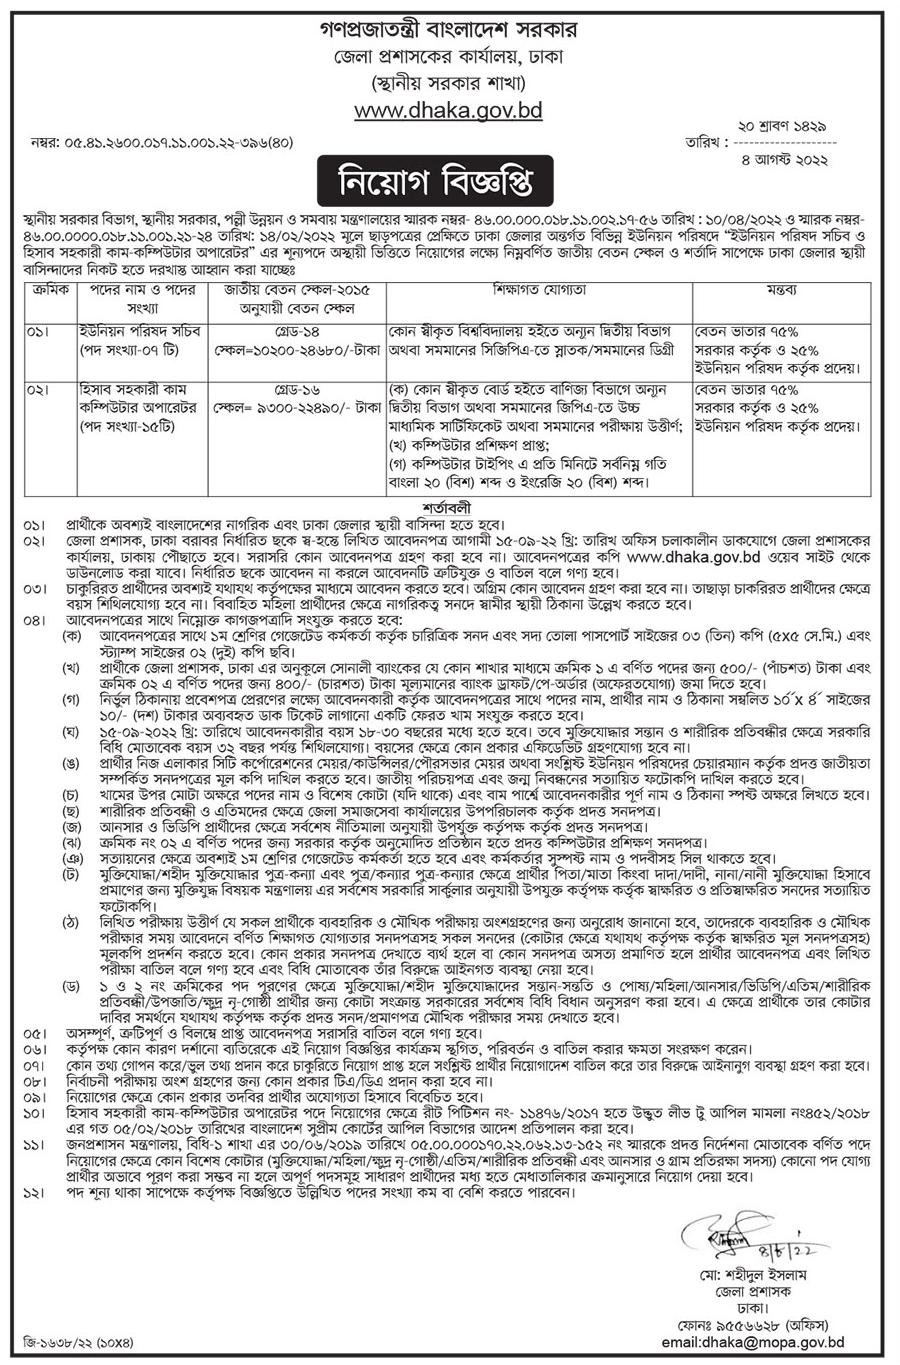 Dhaka DC Office job circular 2022 | Dhaka District Commissioner Office job circular 2022 | ঢাকা ডিসি অফিস নিয়োগ বিজ্ঞপ্তি ২০২২ | ঢাকা জেলা প্রশাসক এর কার্যালয়ে নিয়োগ বিজ্ঞপ্তি ২০২২